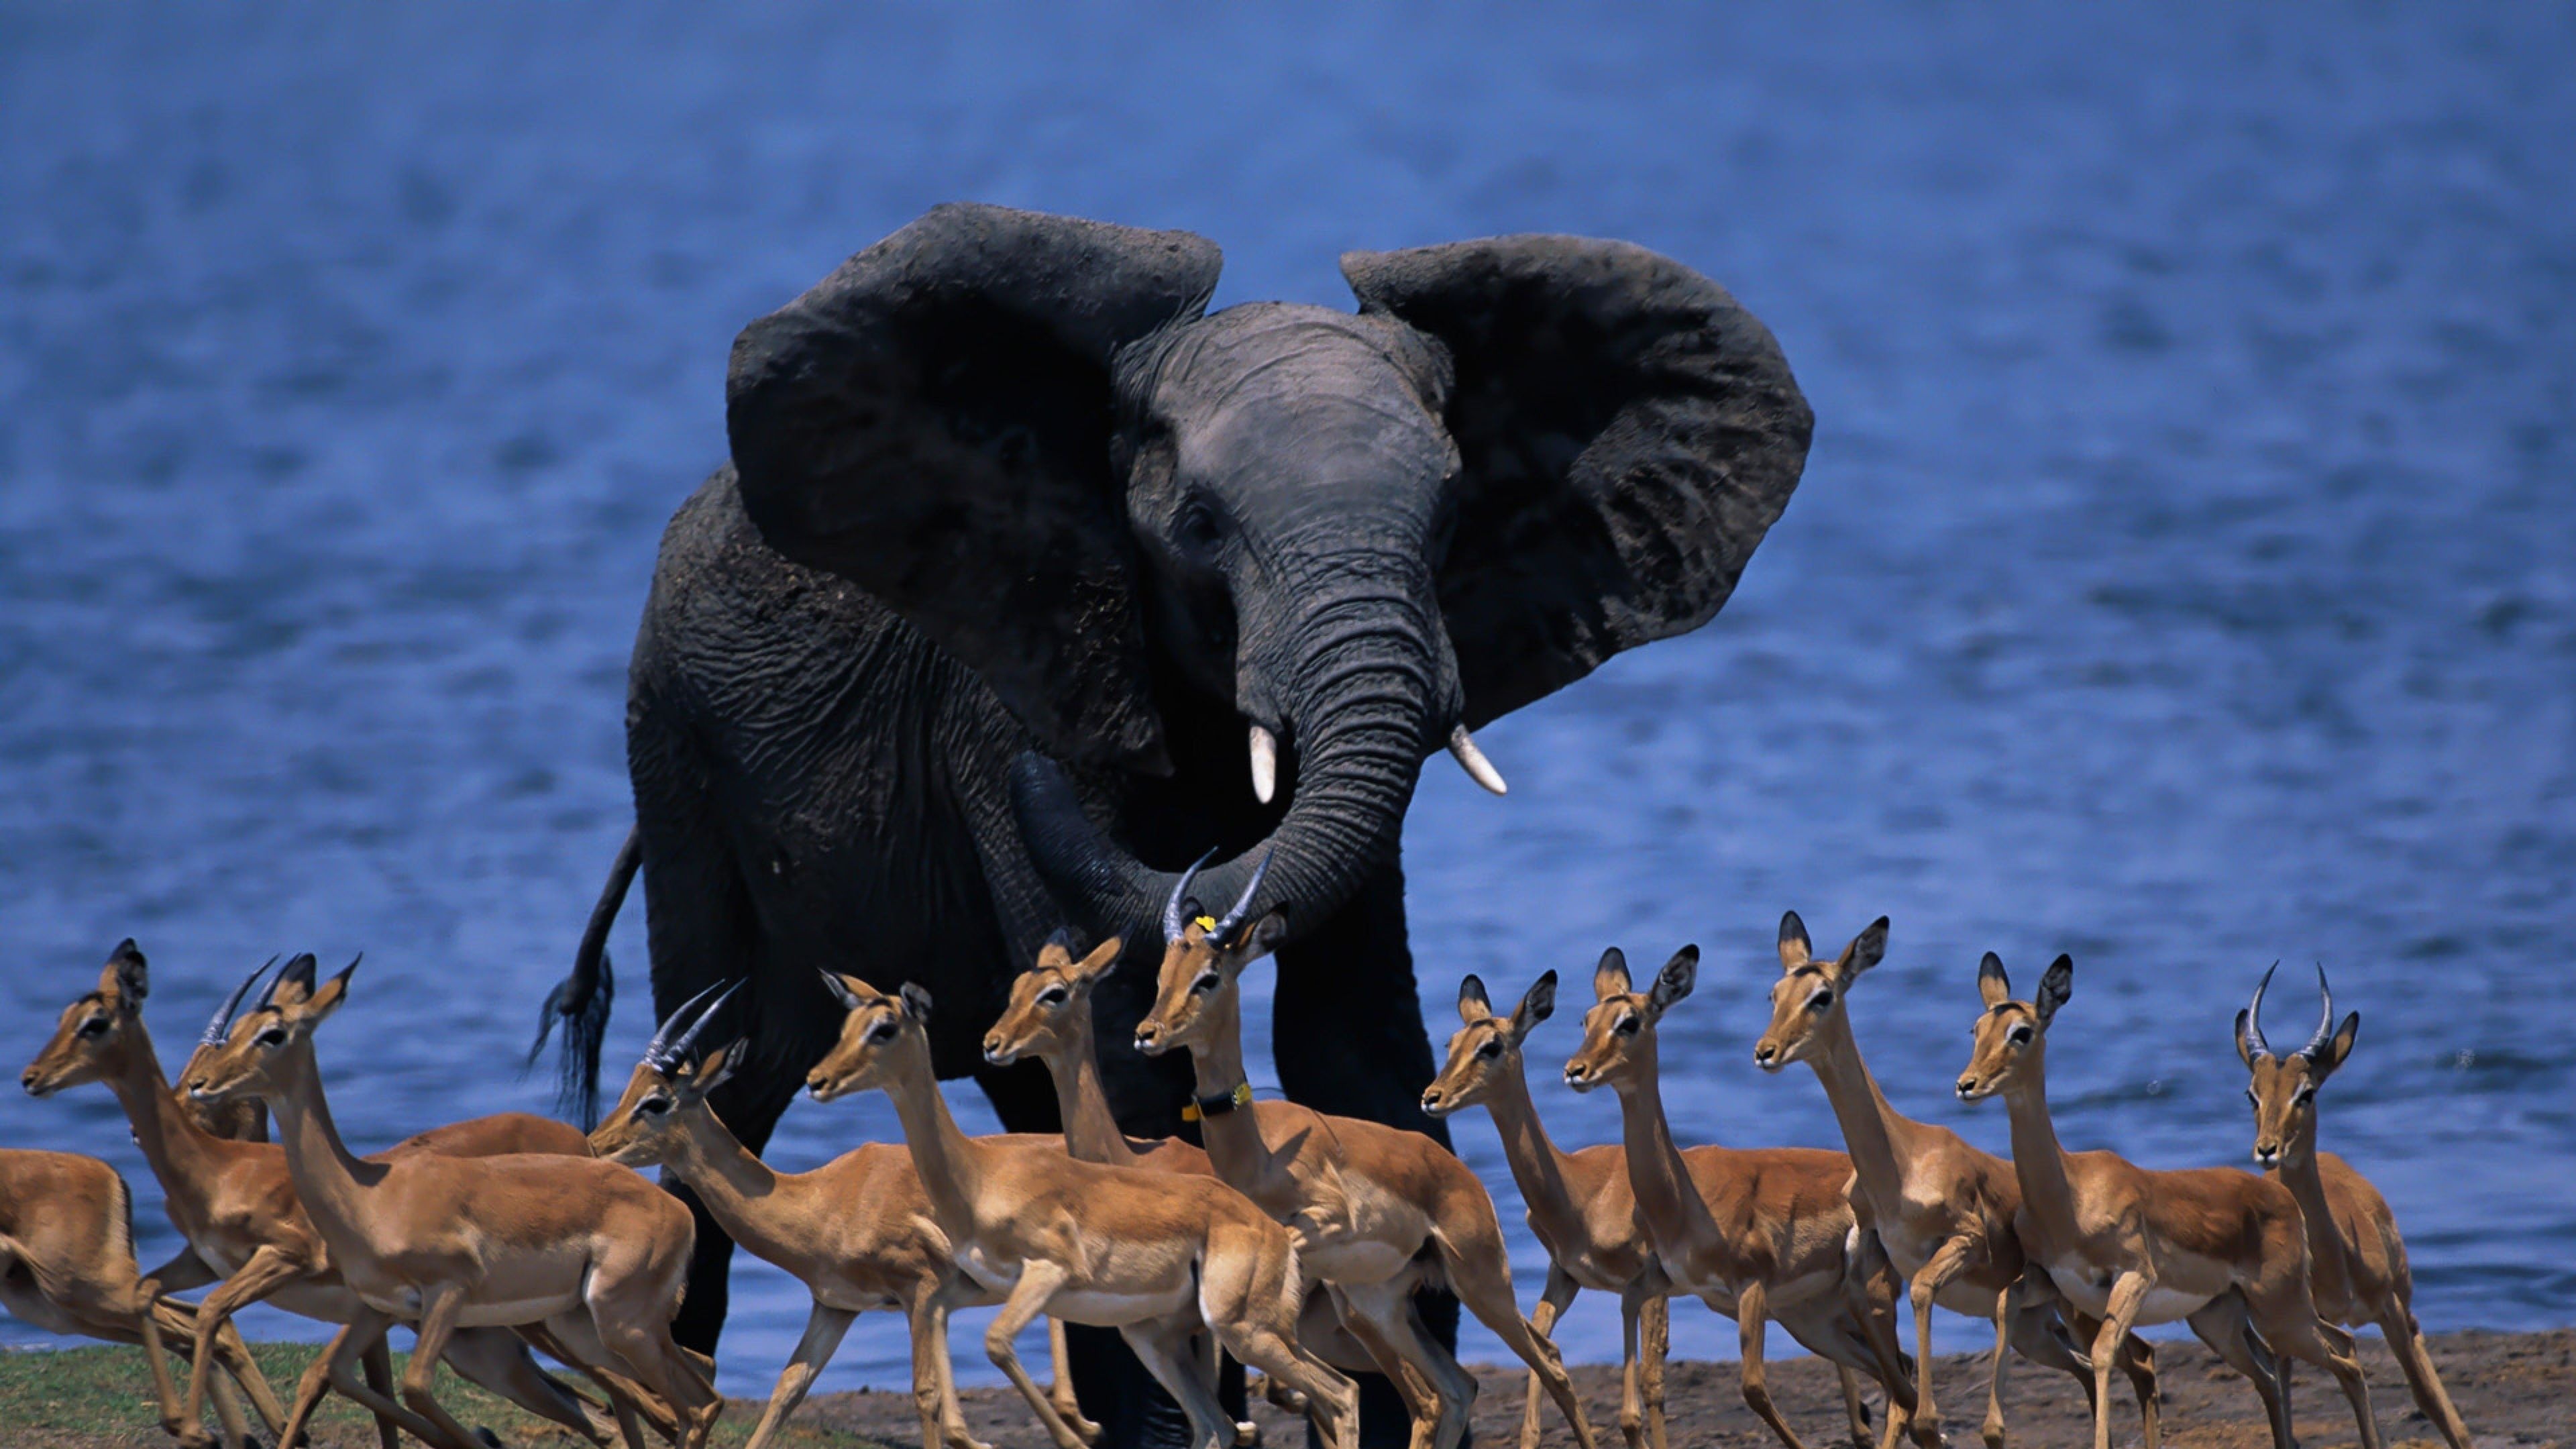 Wildlife Africa, Elephant, Pygmy antelope, 4K Ultra HD wallpaper, 3840x2160 4K Desktop